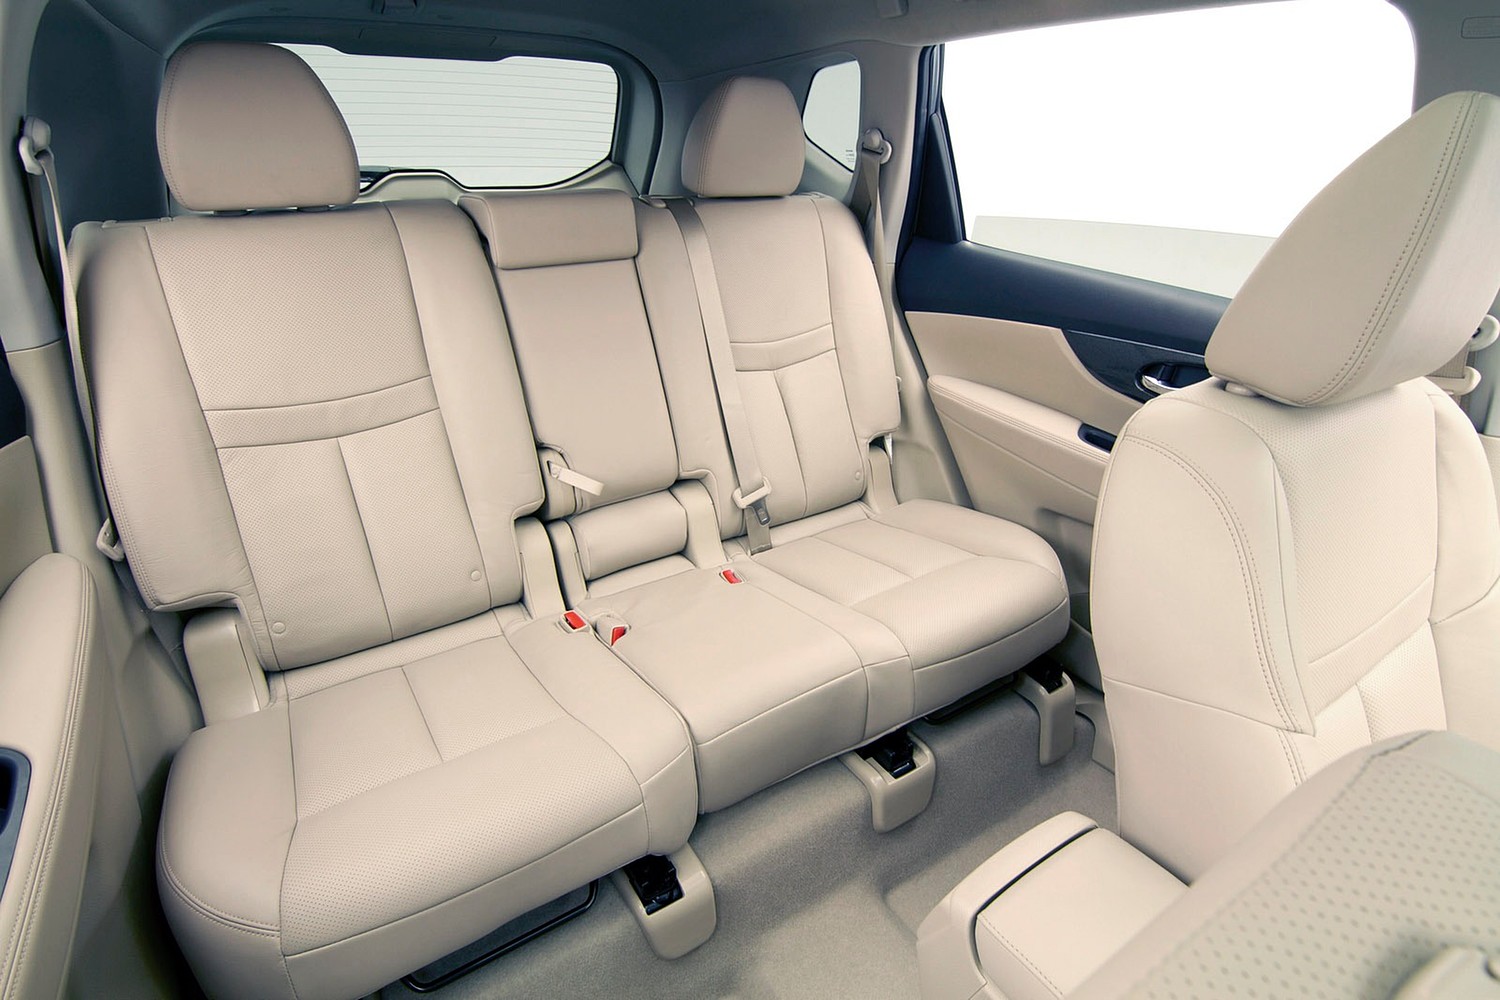 2016 Nissan Rogue SL 4dr SUV Rear Interior